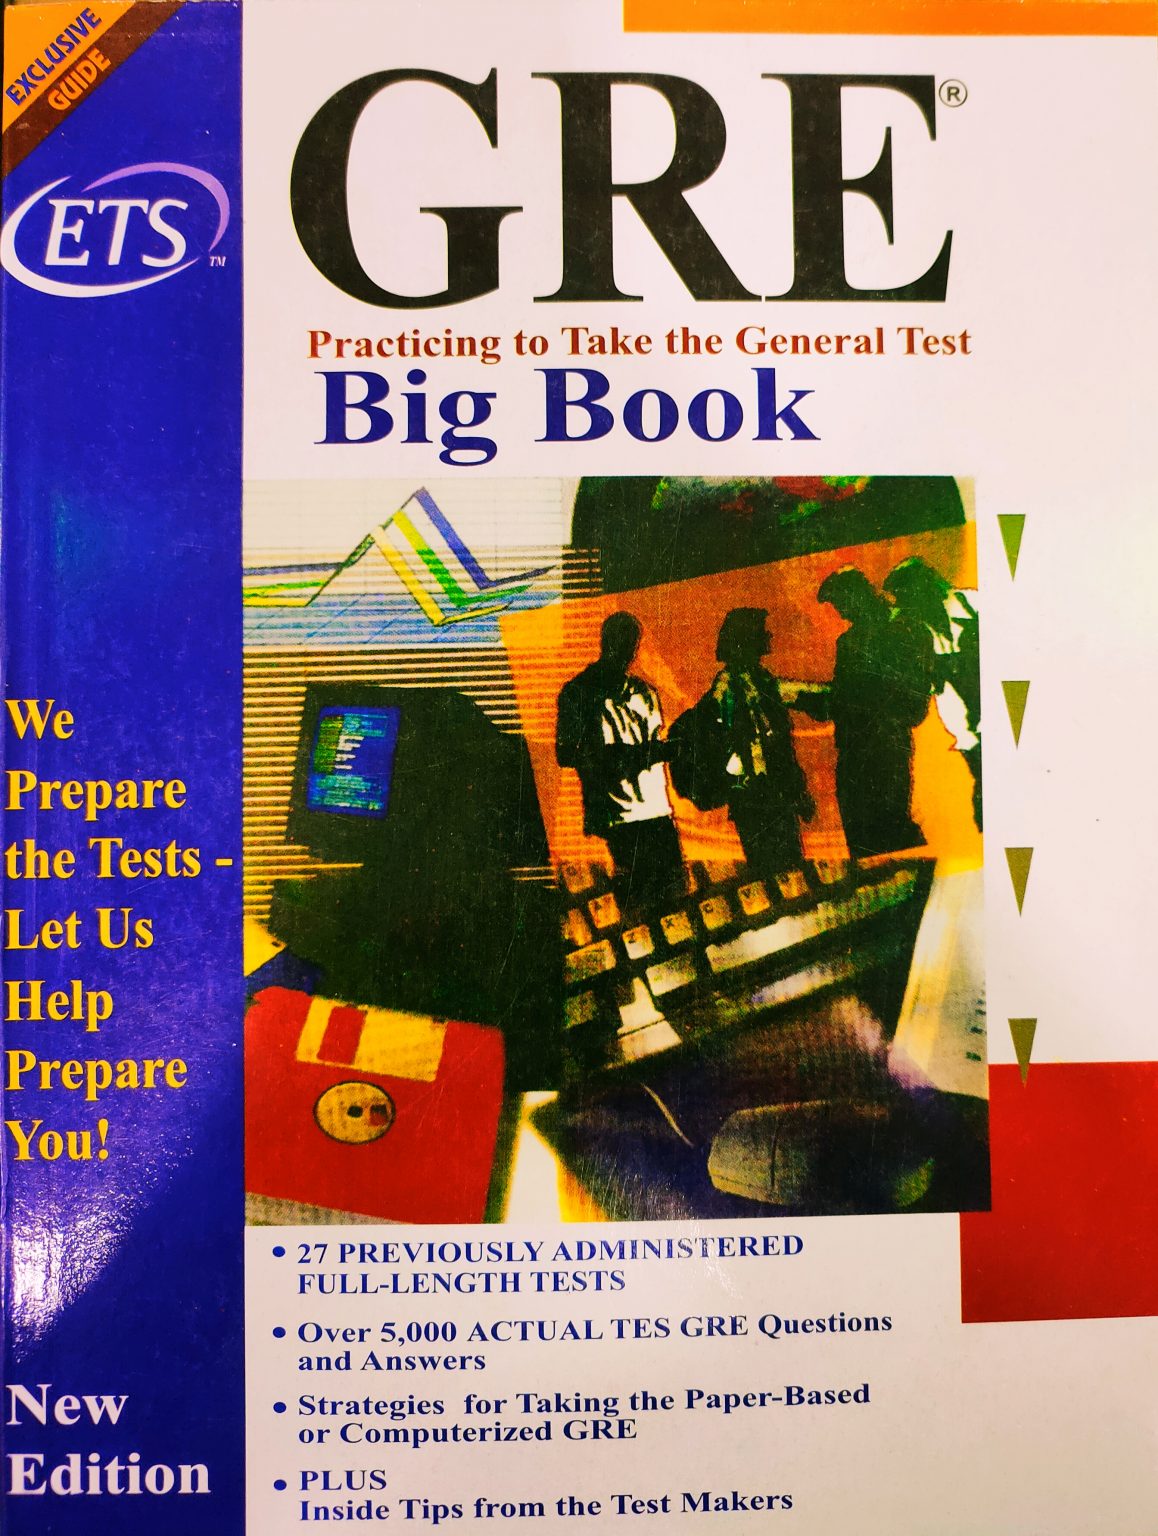 ETS GRE Big Book GREC's Boi cycle